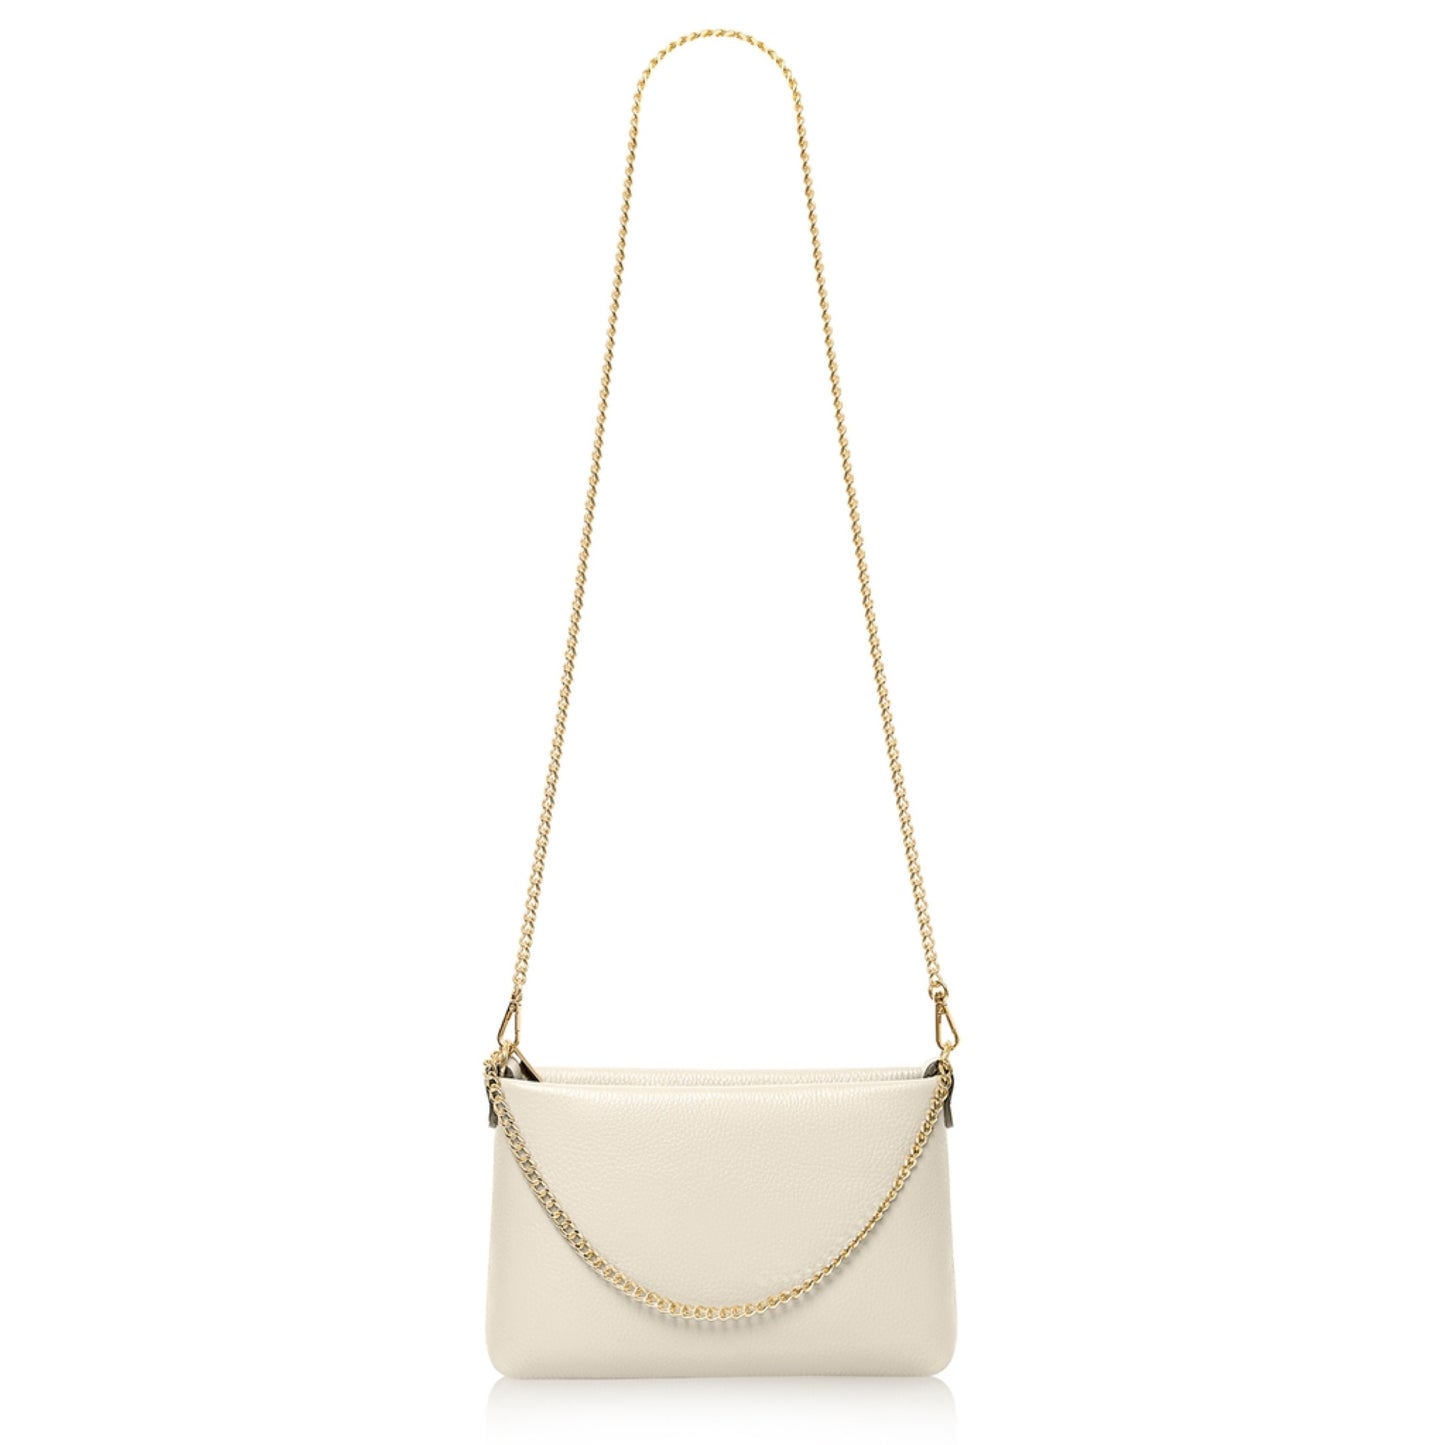 Chloe - gold chain leather handbag